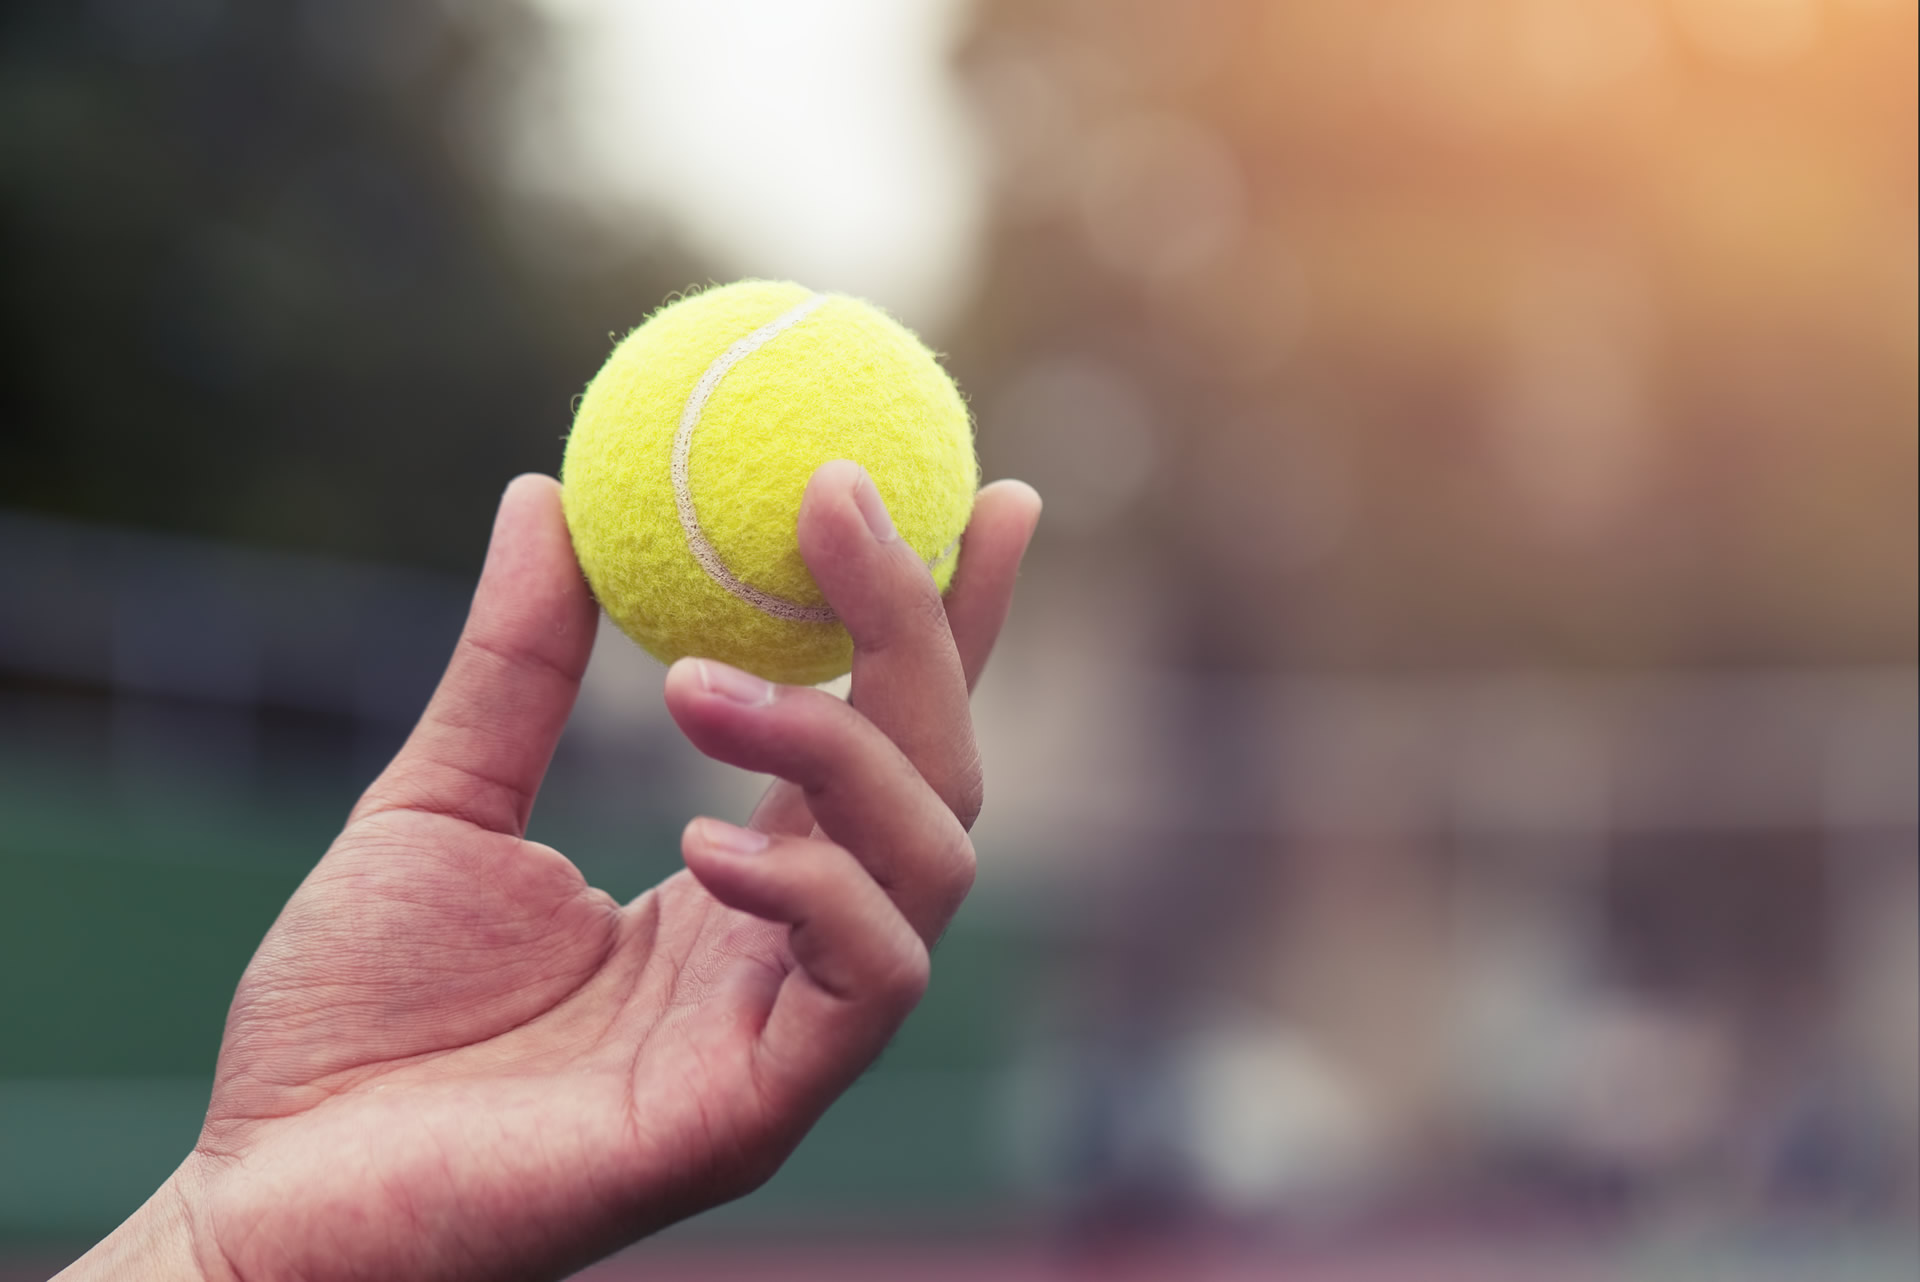 Myofascial Release Exercises Using a Tennis Ball